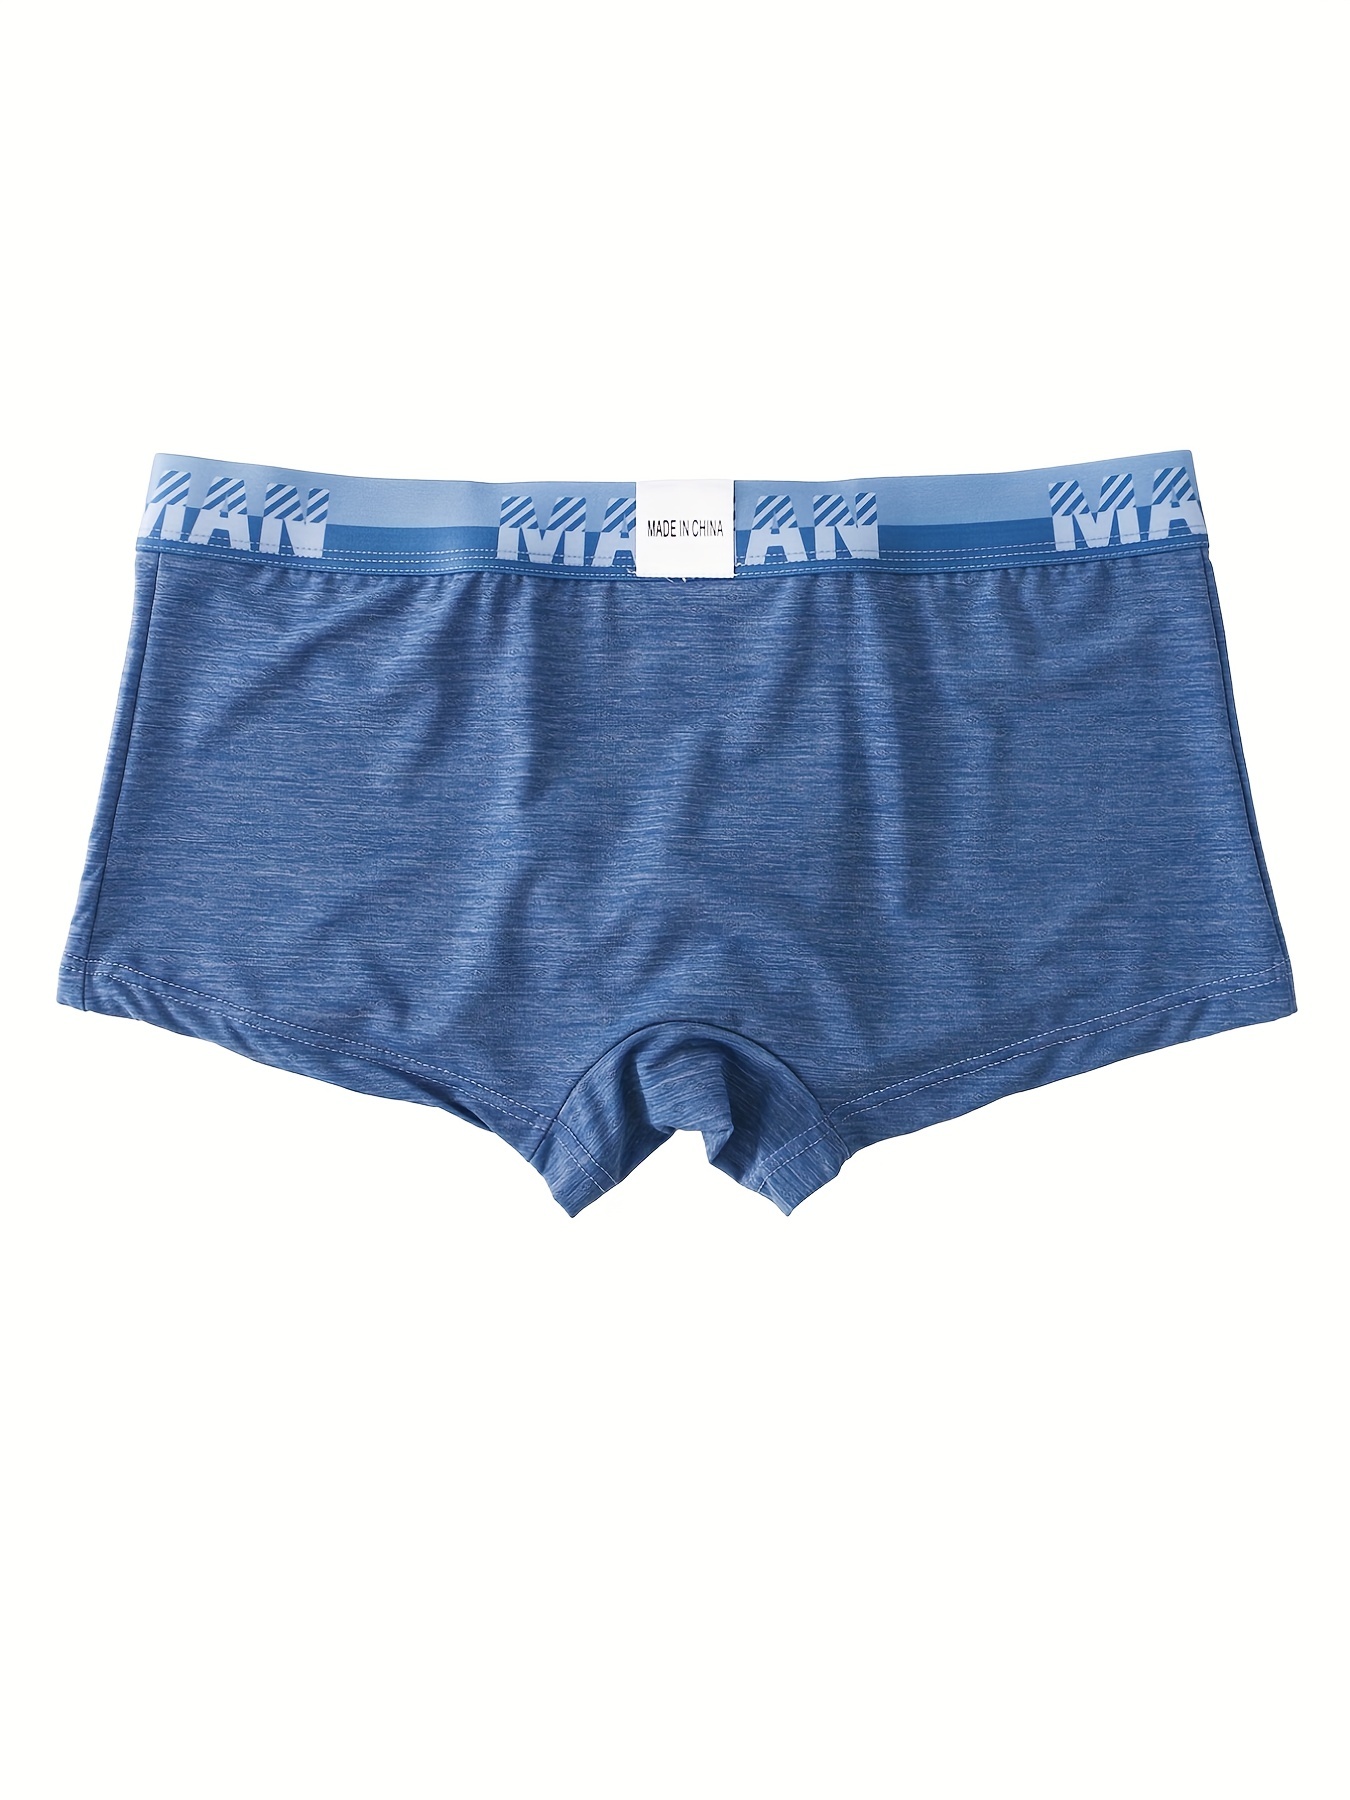 Underpants Mens Elephant Trunk Underwear Boxer Briefs Ice Silk